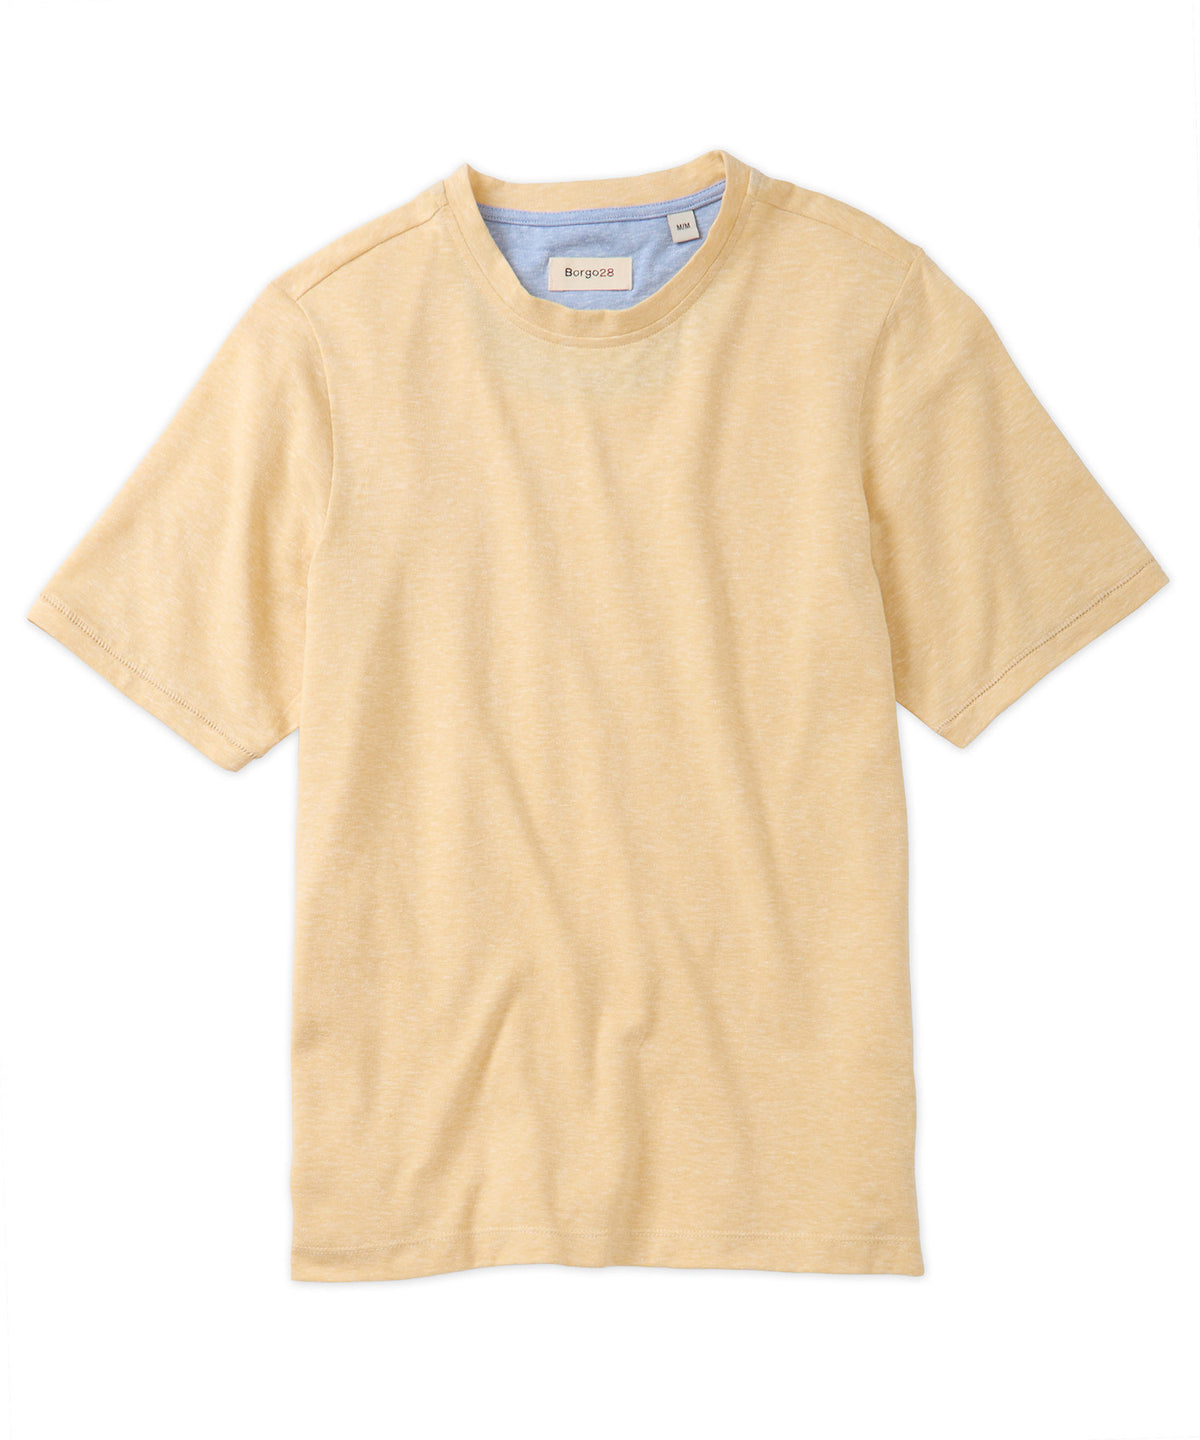 Slub Knit Crewneck Tee Shirt